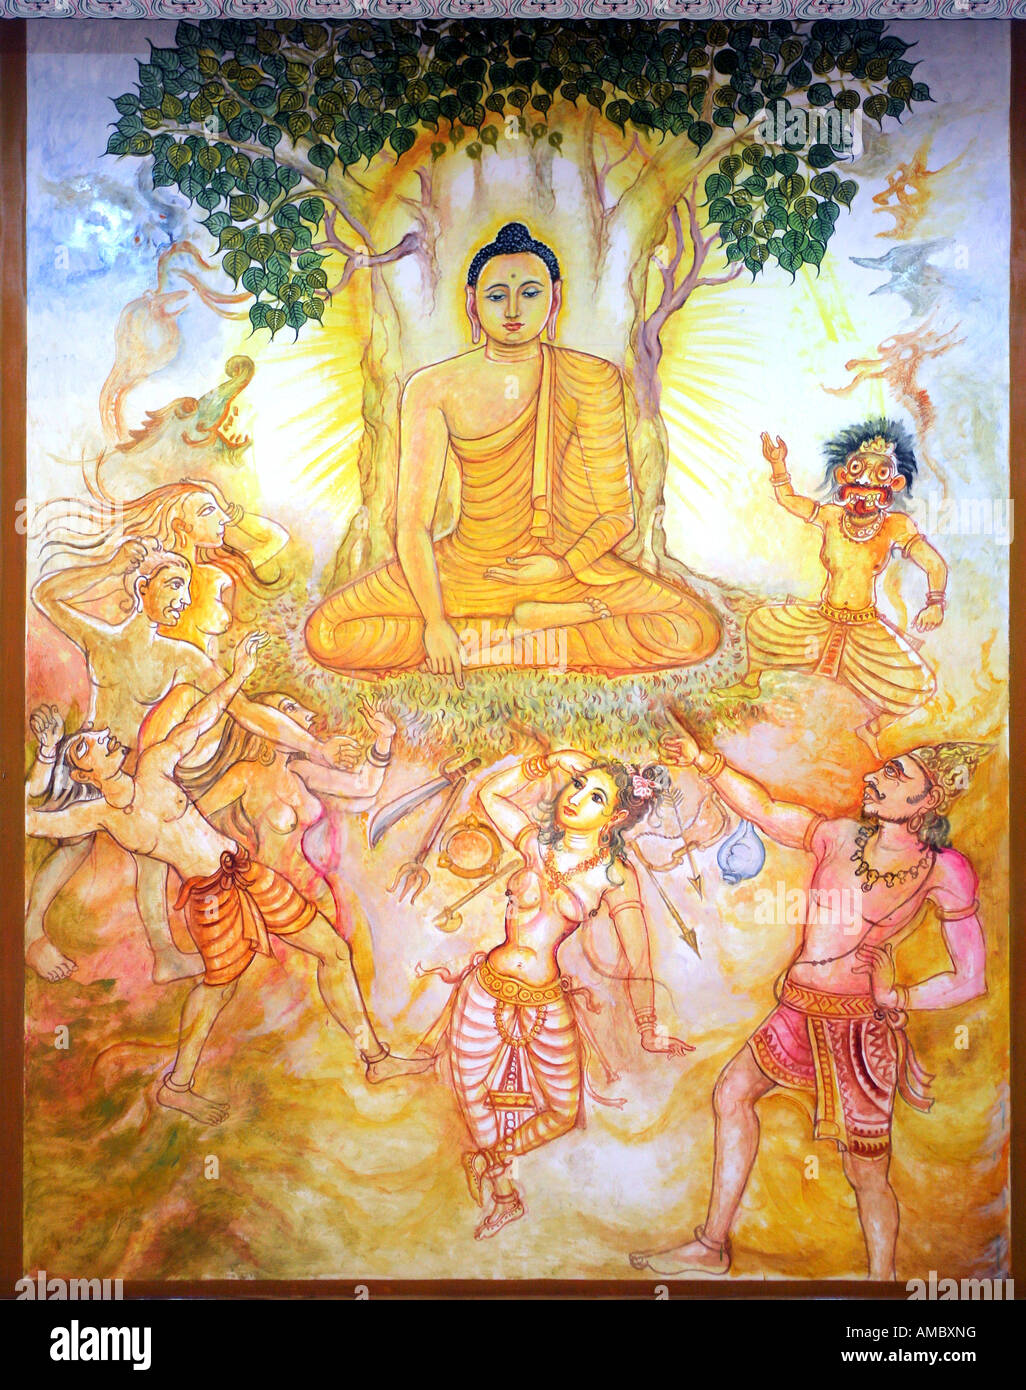 India, Bodhgaya, 23.11.2007: Buddha meditating under the Bodhi tree, Mahabodhi Temple Stock Photo